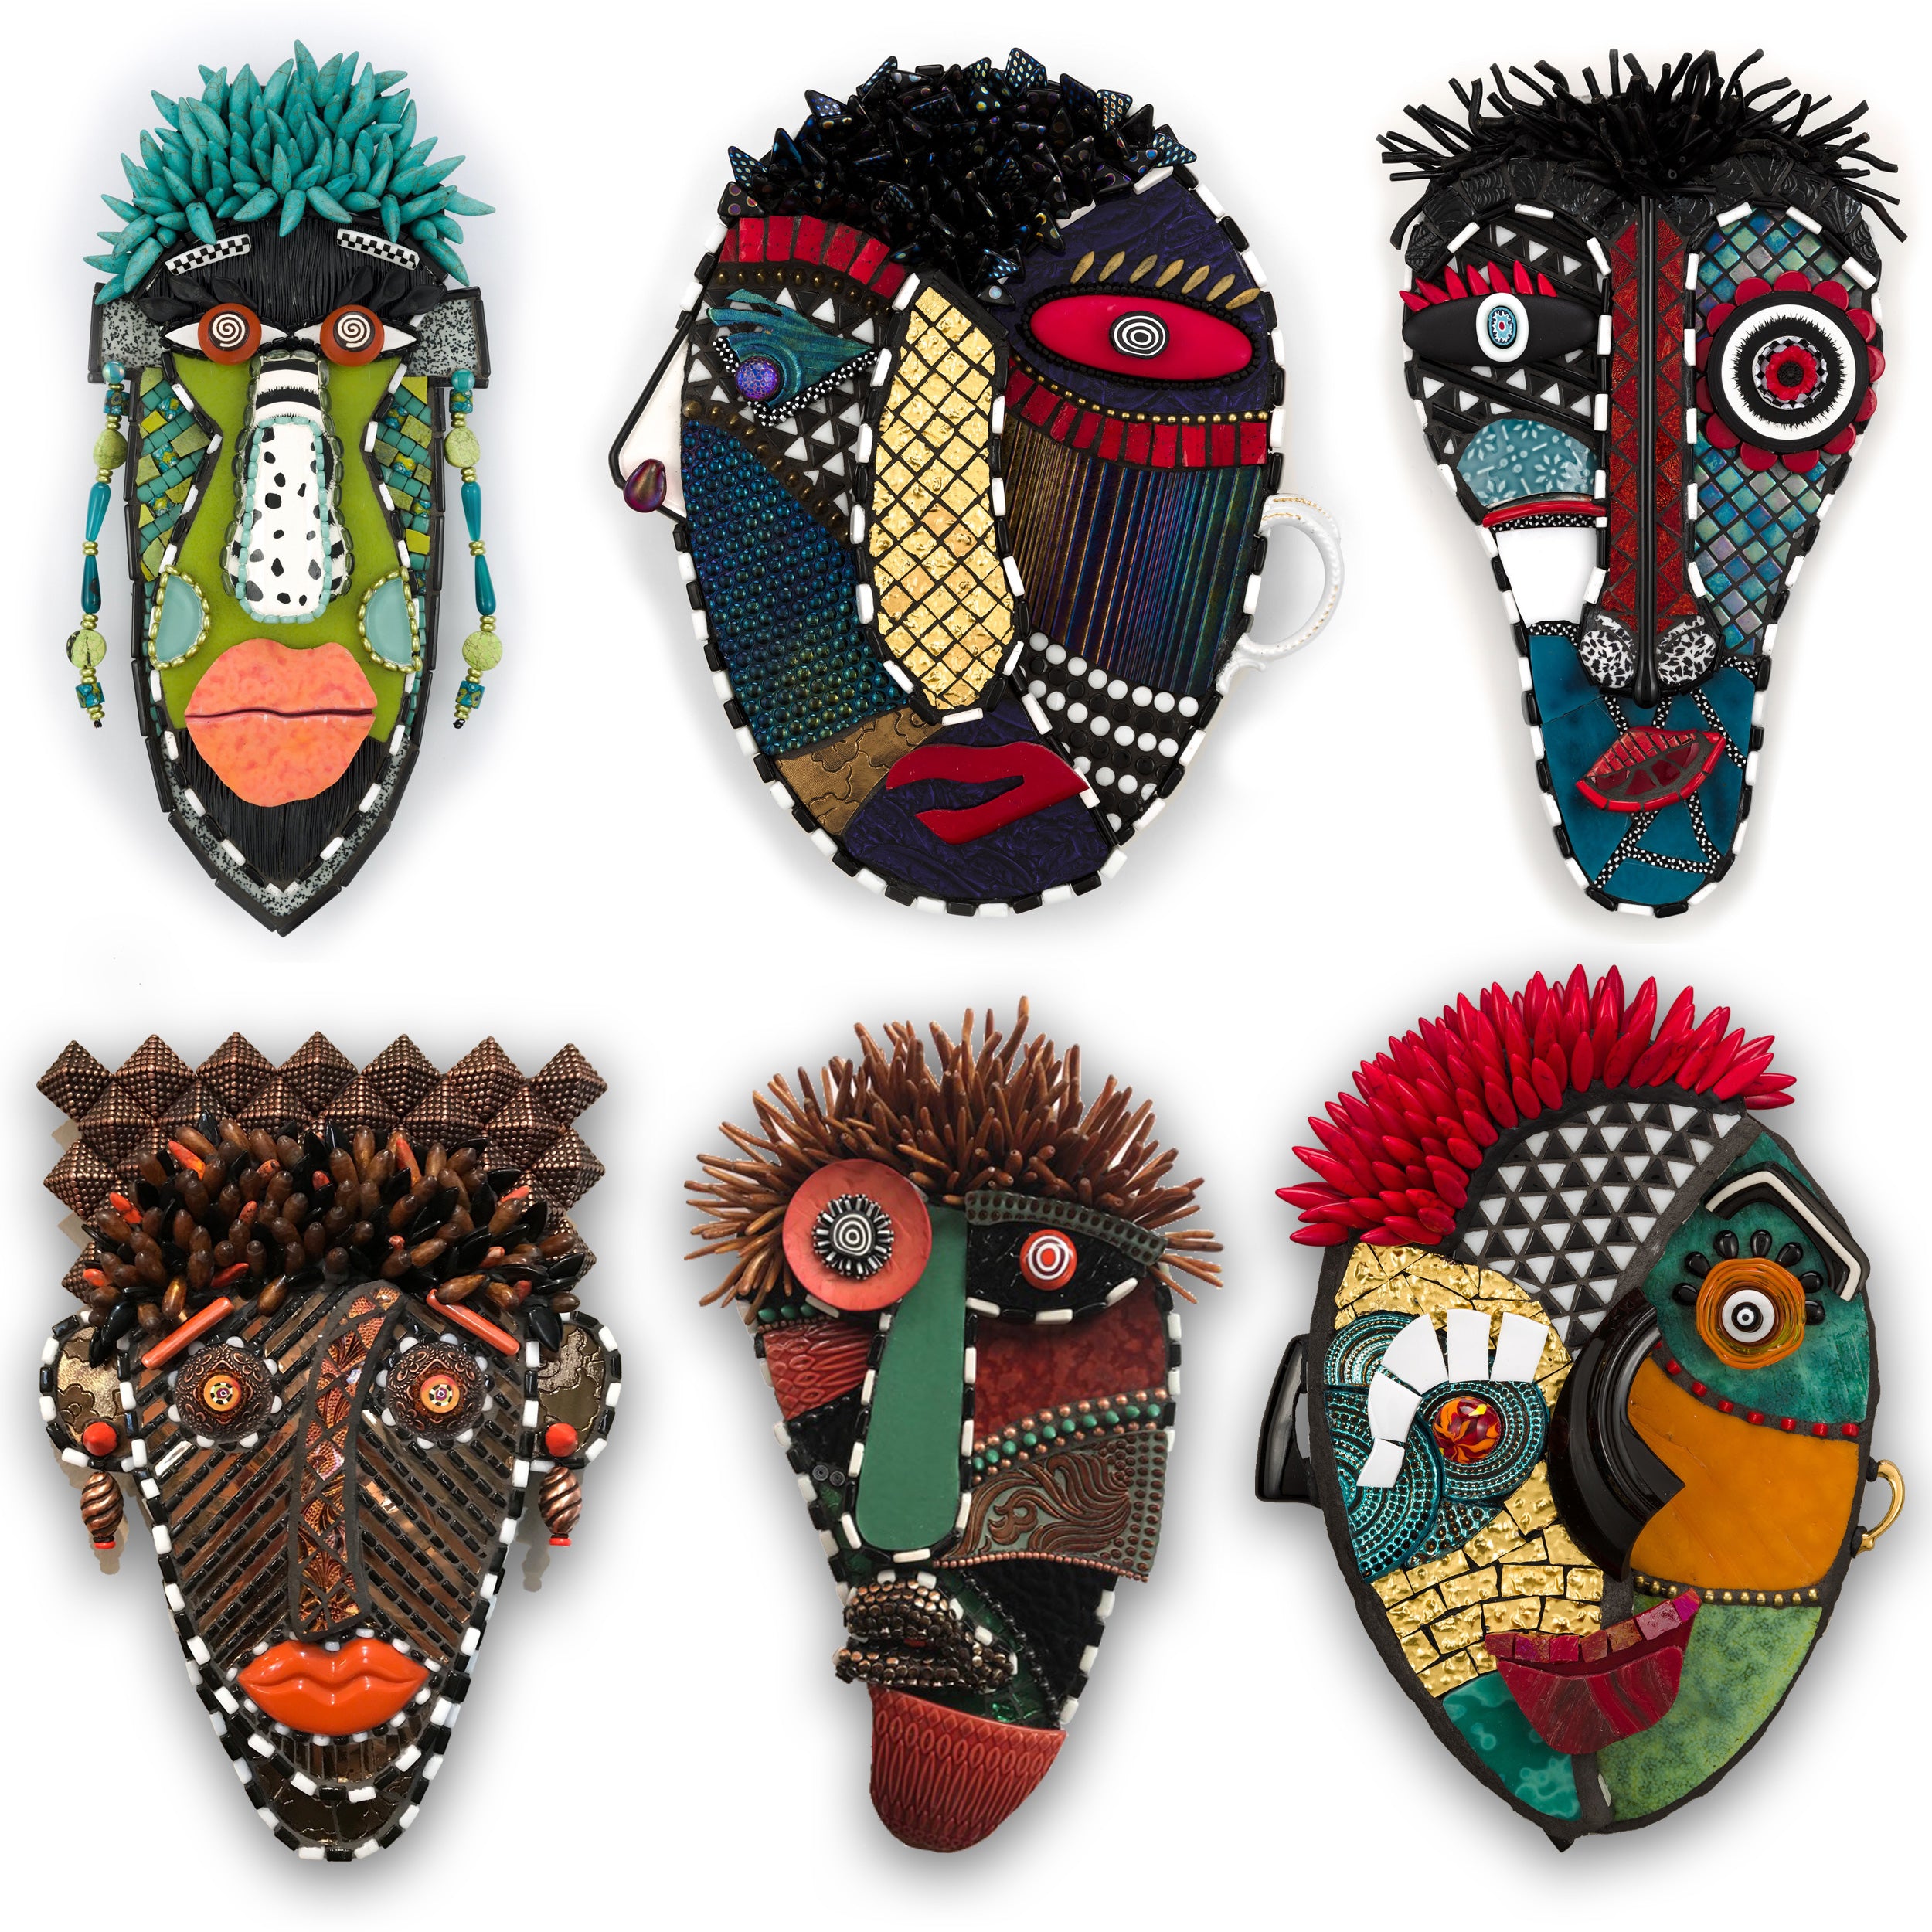 Mixed Media Mosaic Masks by Joan Schwartz